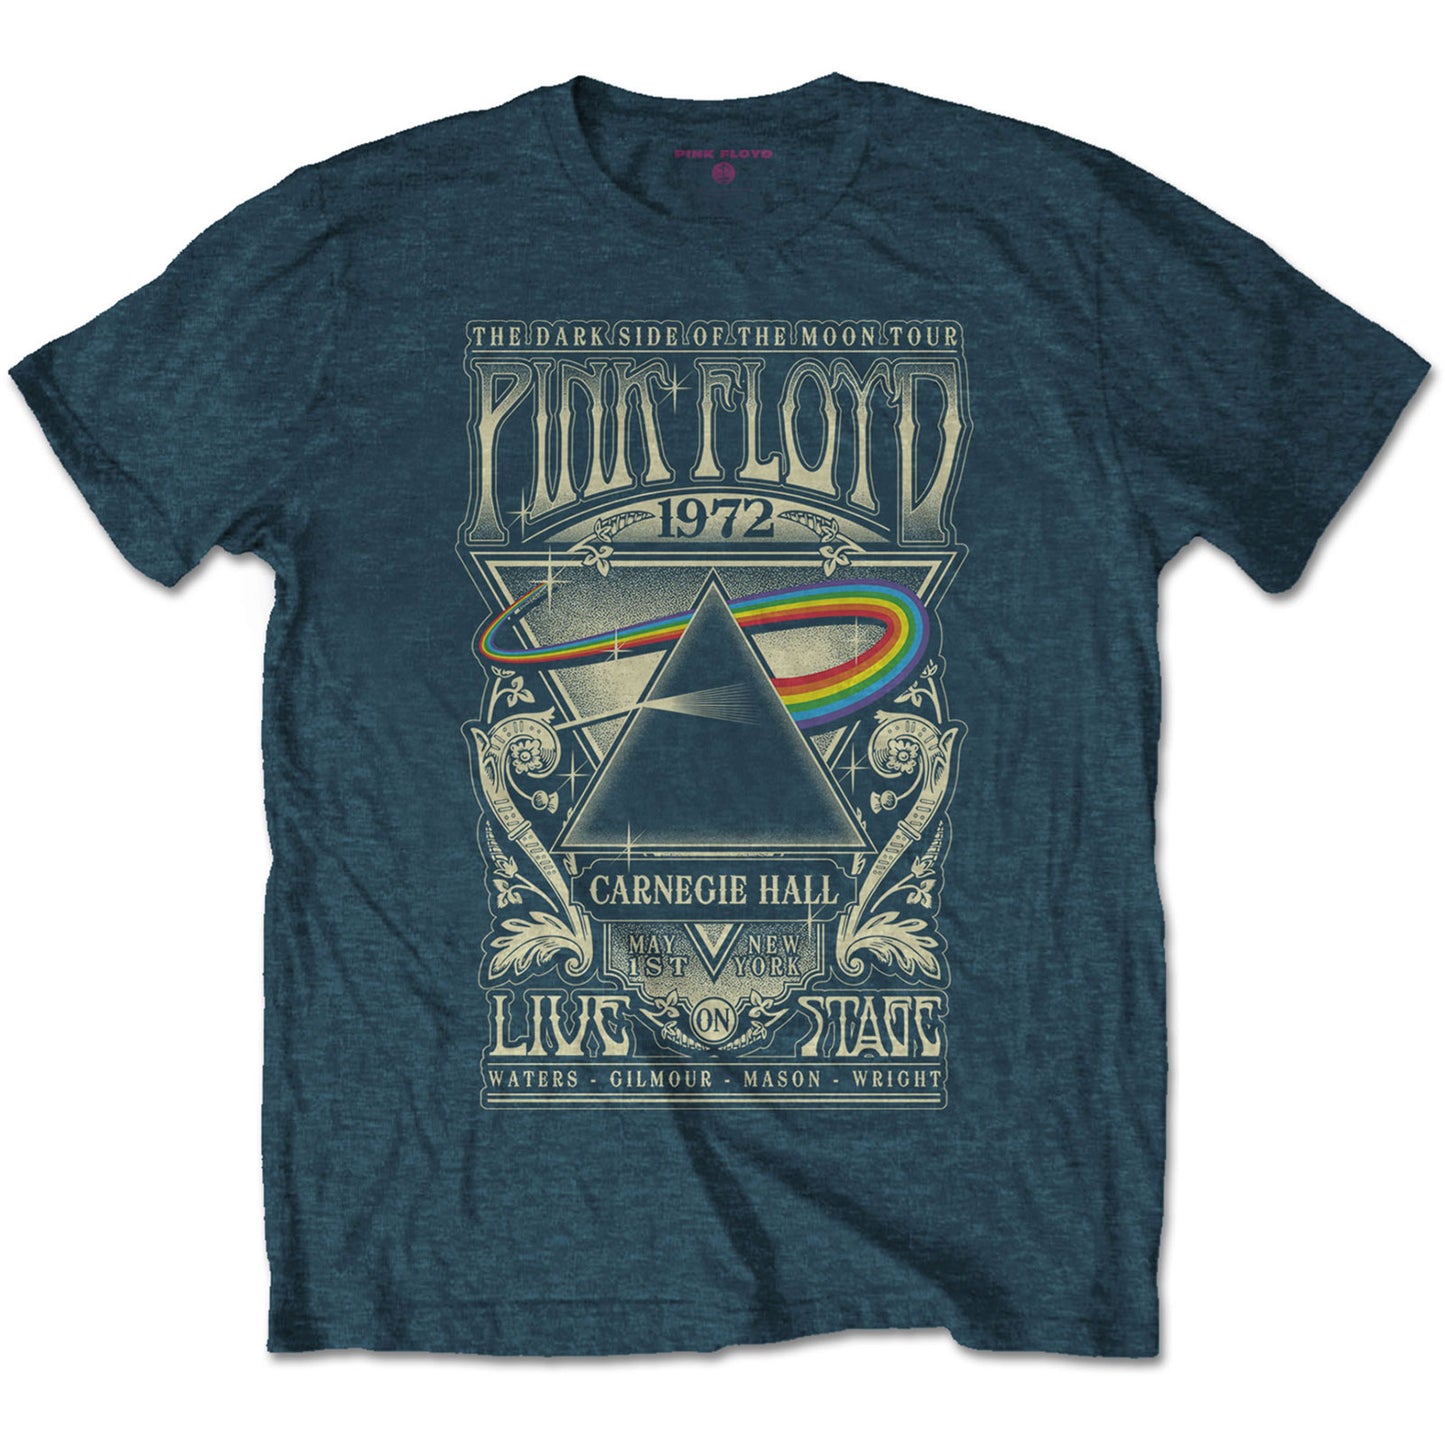 Pink Floyd T-Shirt: Carnegie Hall Poster